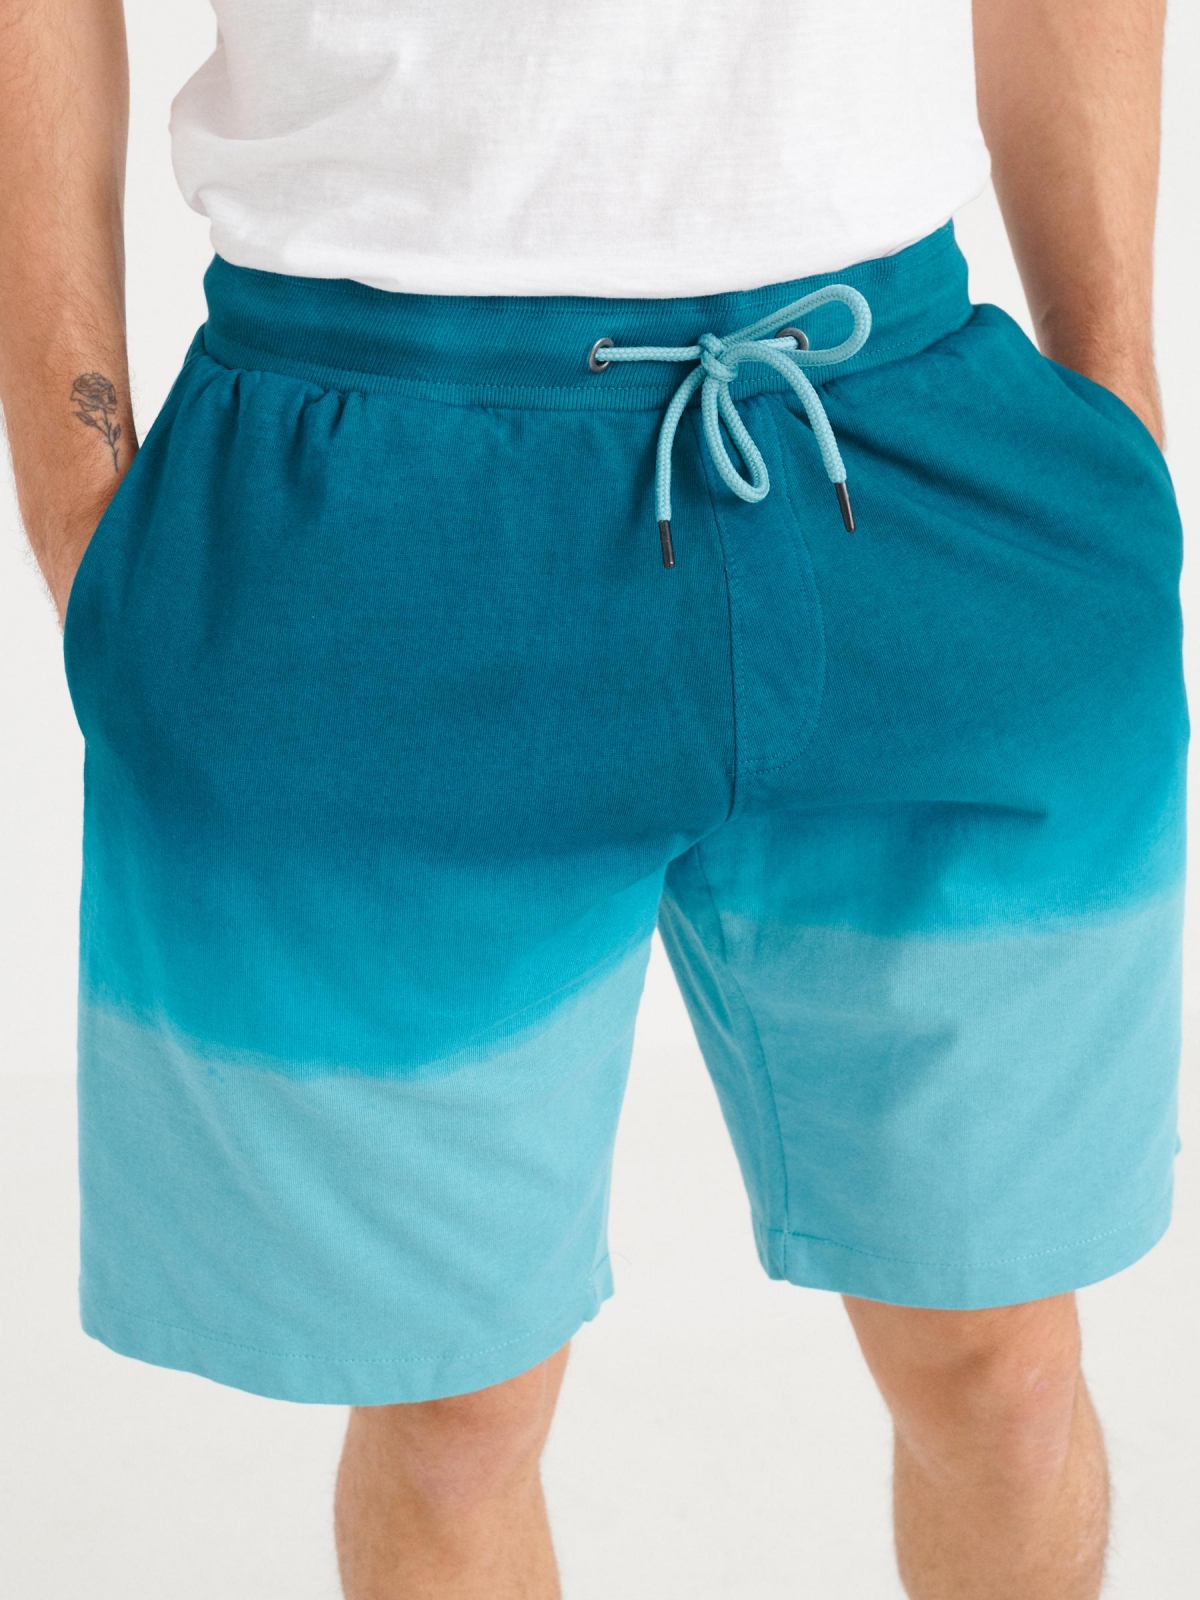 Gradient effect Bermuda shorts blue detail view